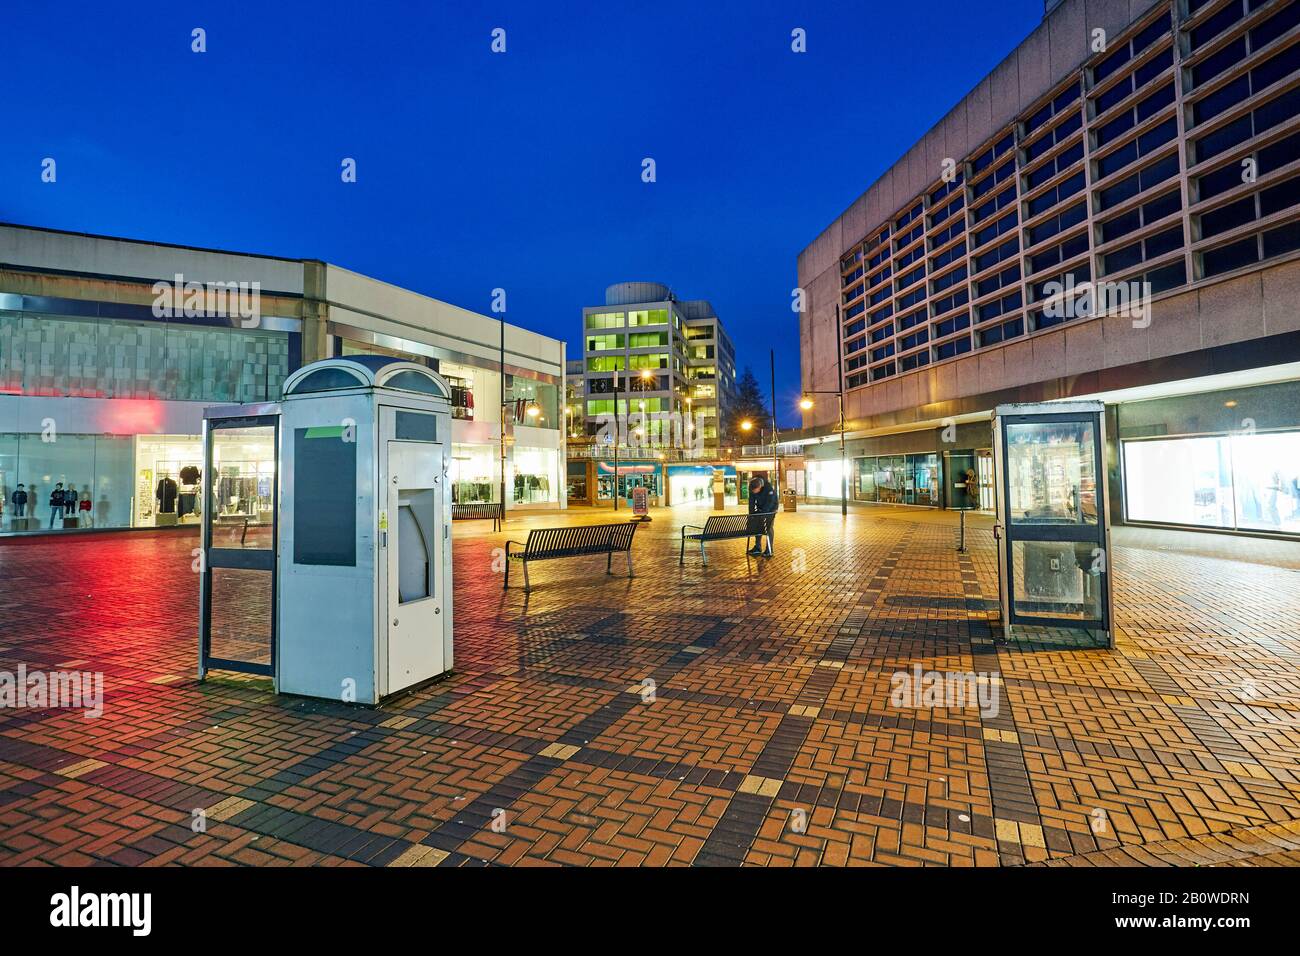 City centre of Swindon illuminated at night with telephone boxes Stock Photo